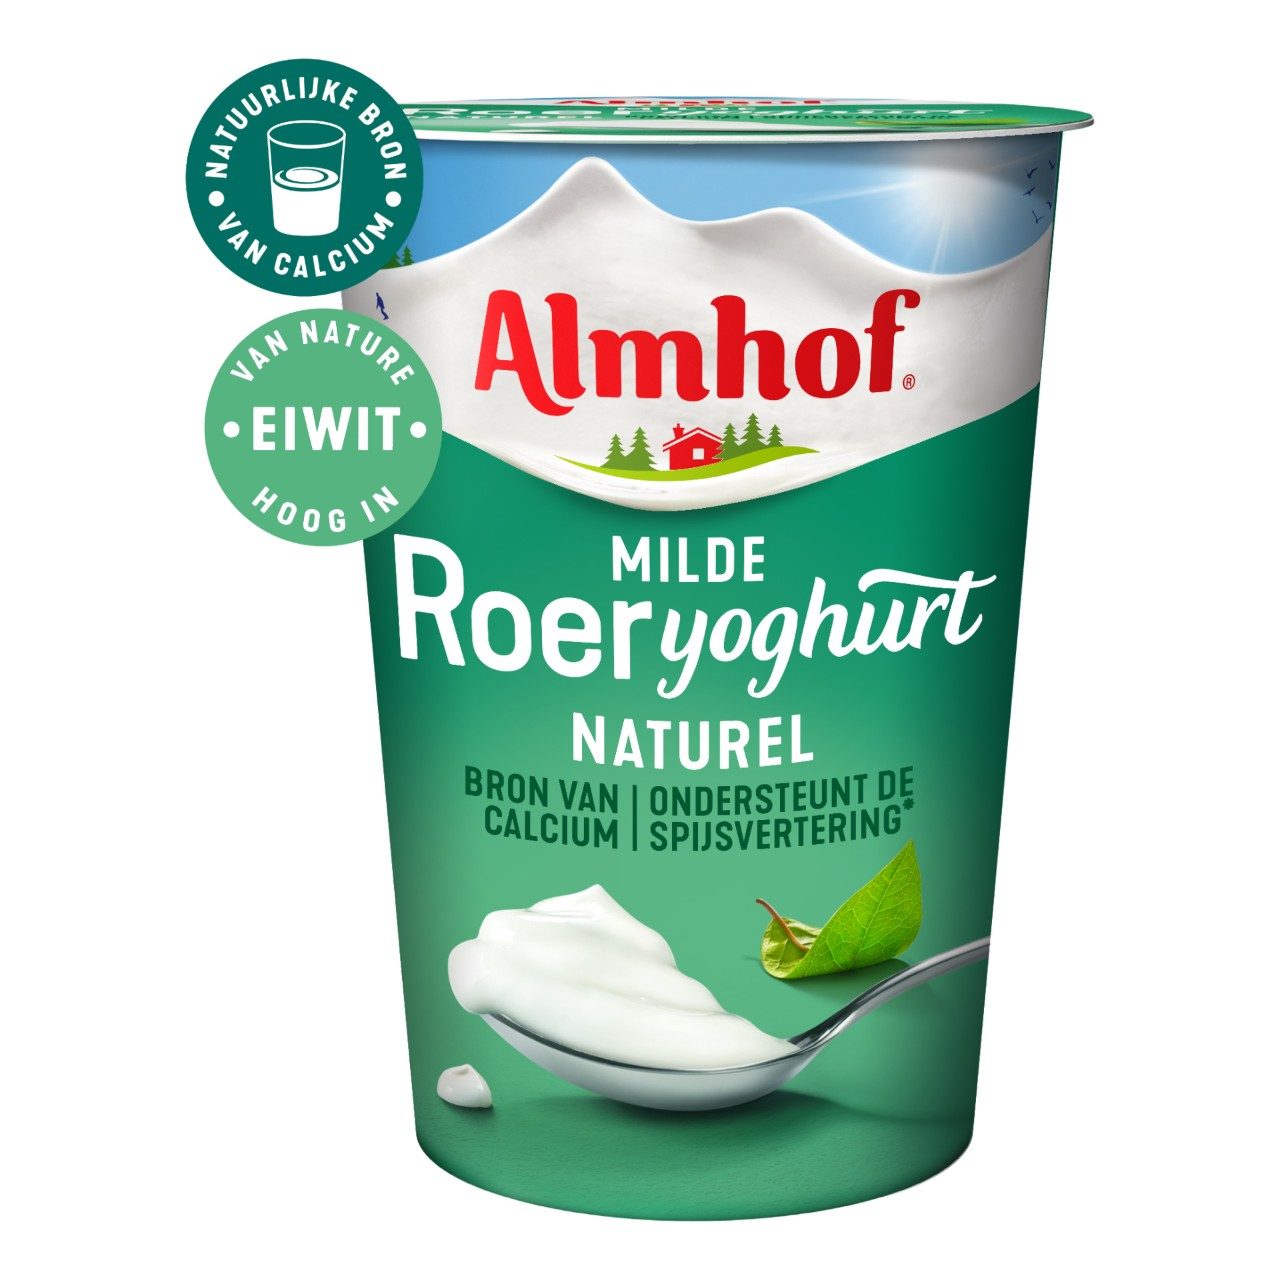 Roer yoghurt naturel